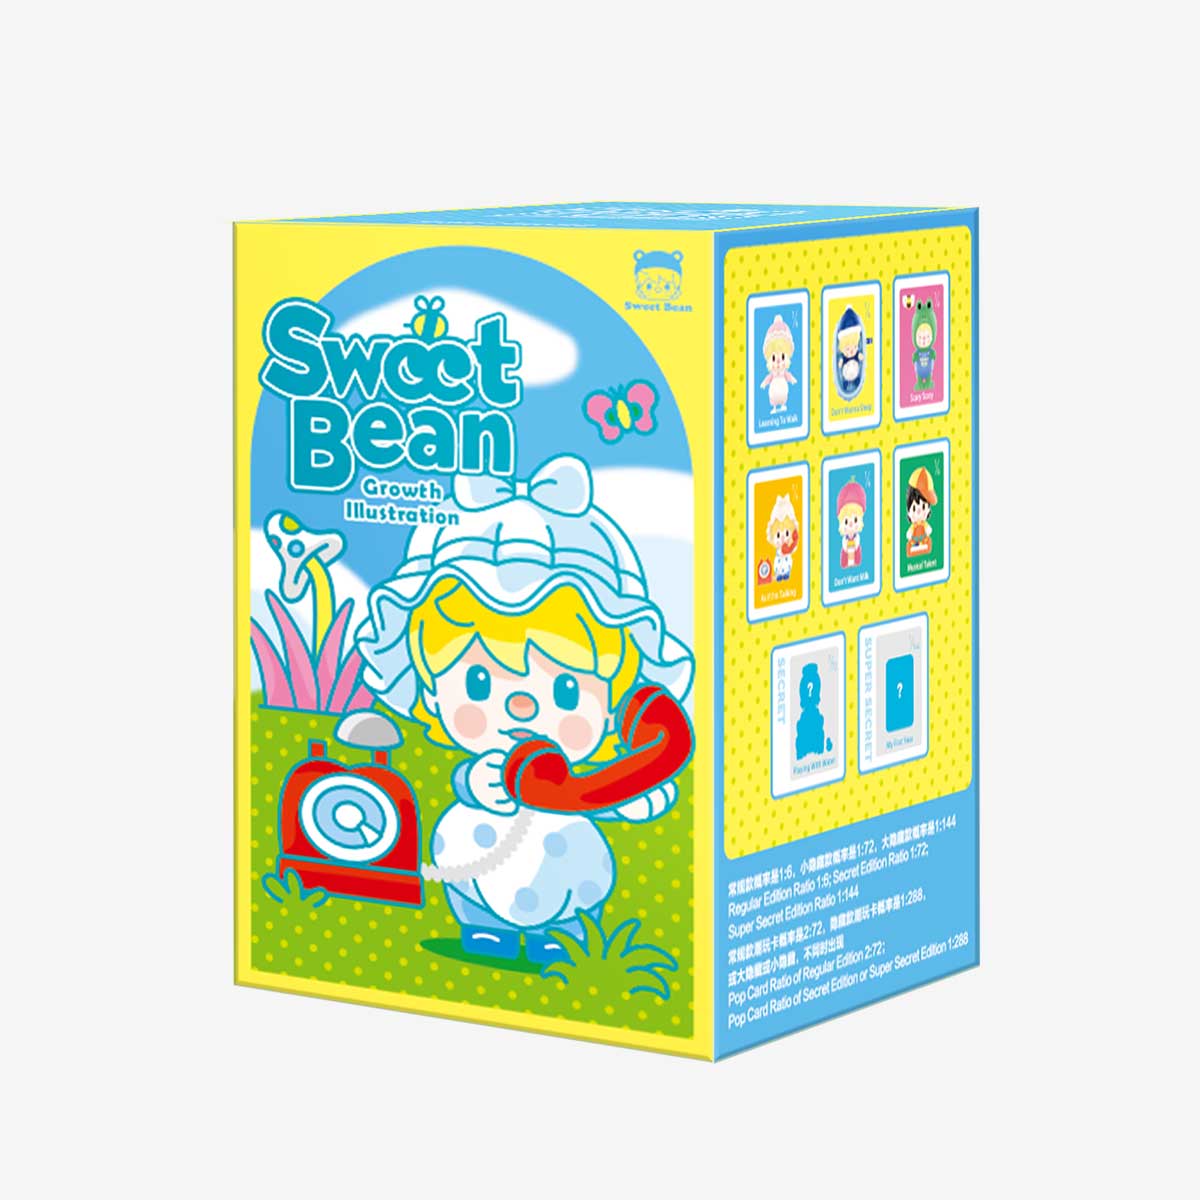 【New】Pop Mart Sweet Bean Growth Illustration Series Blind Box Figures